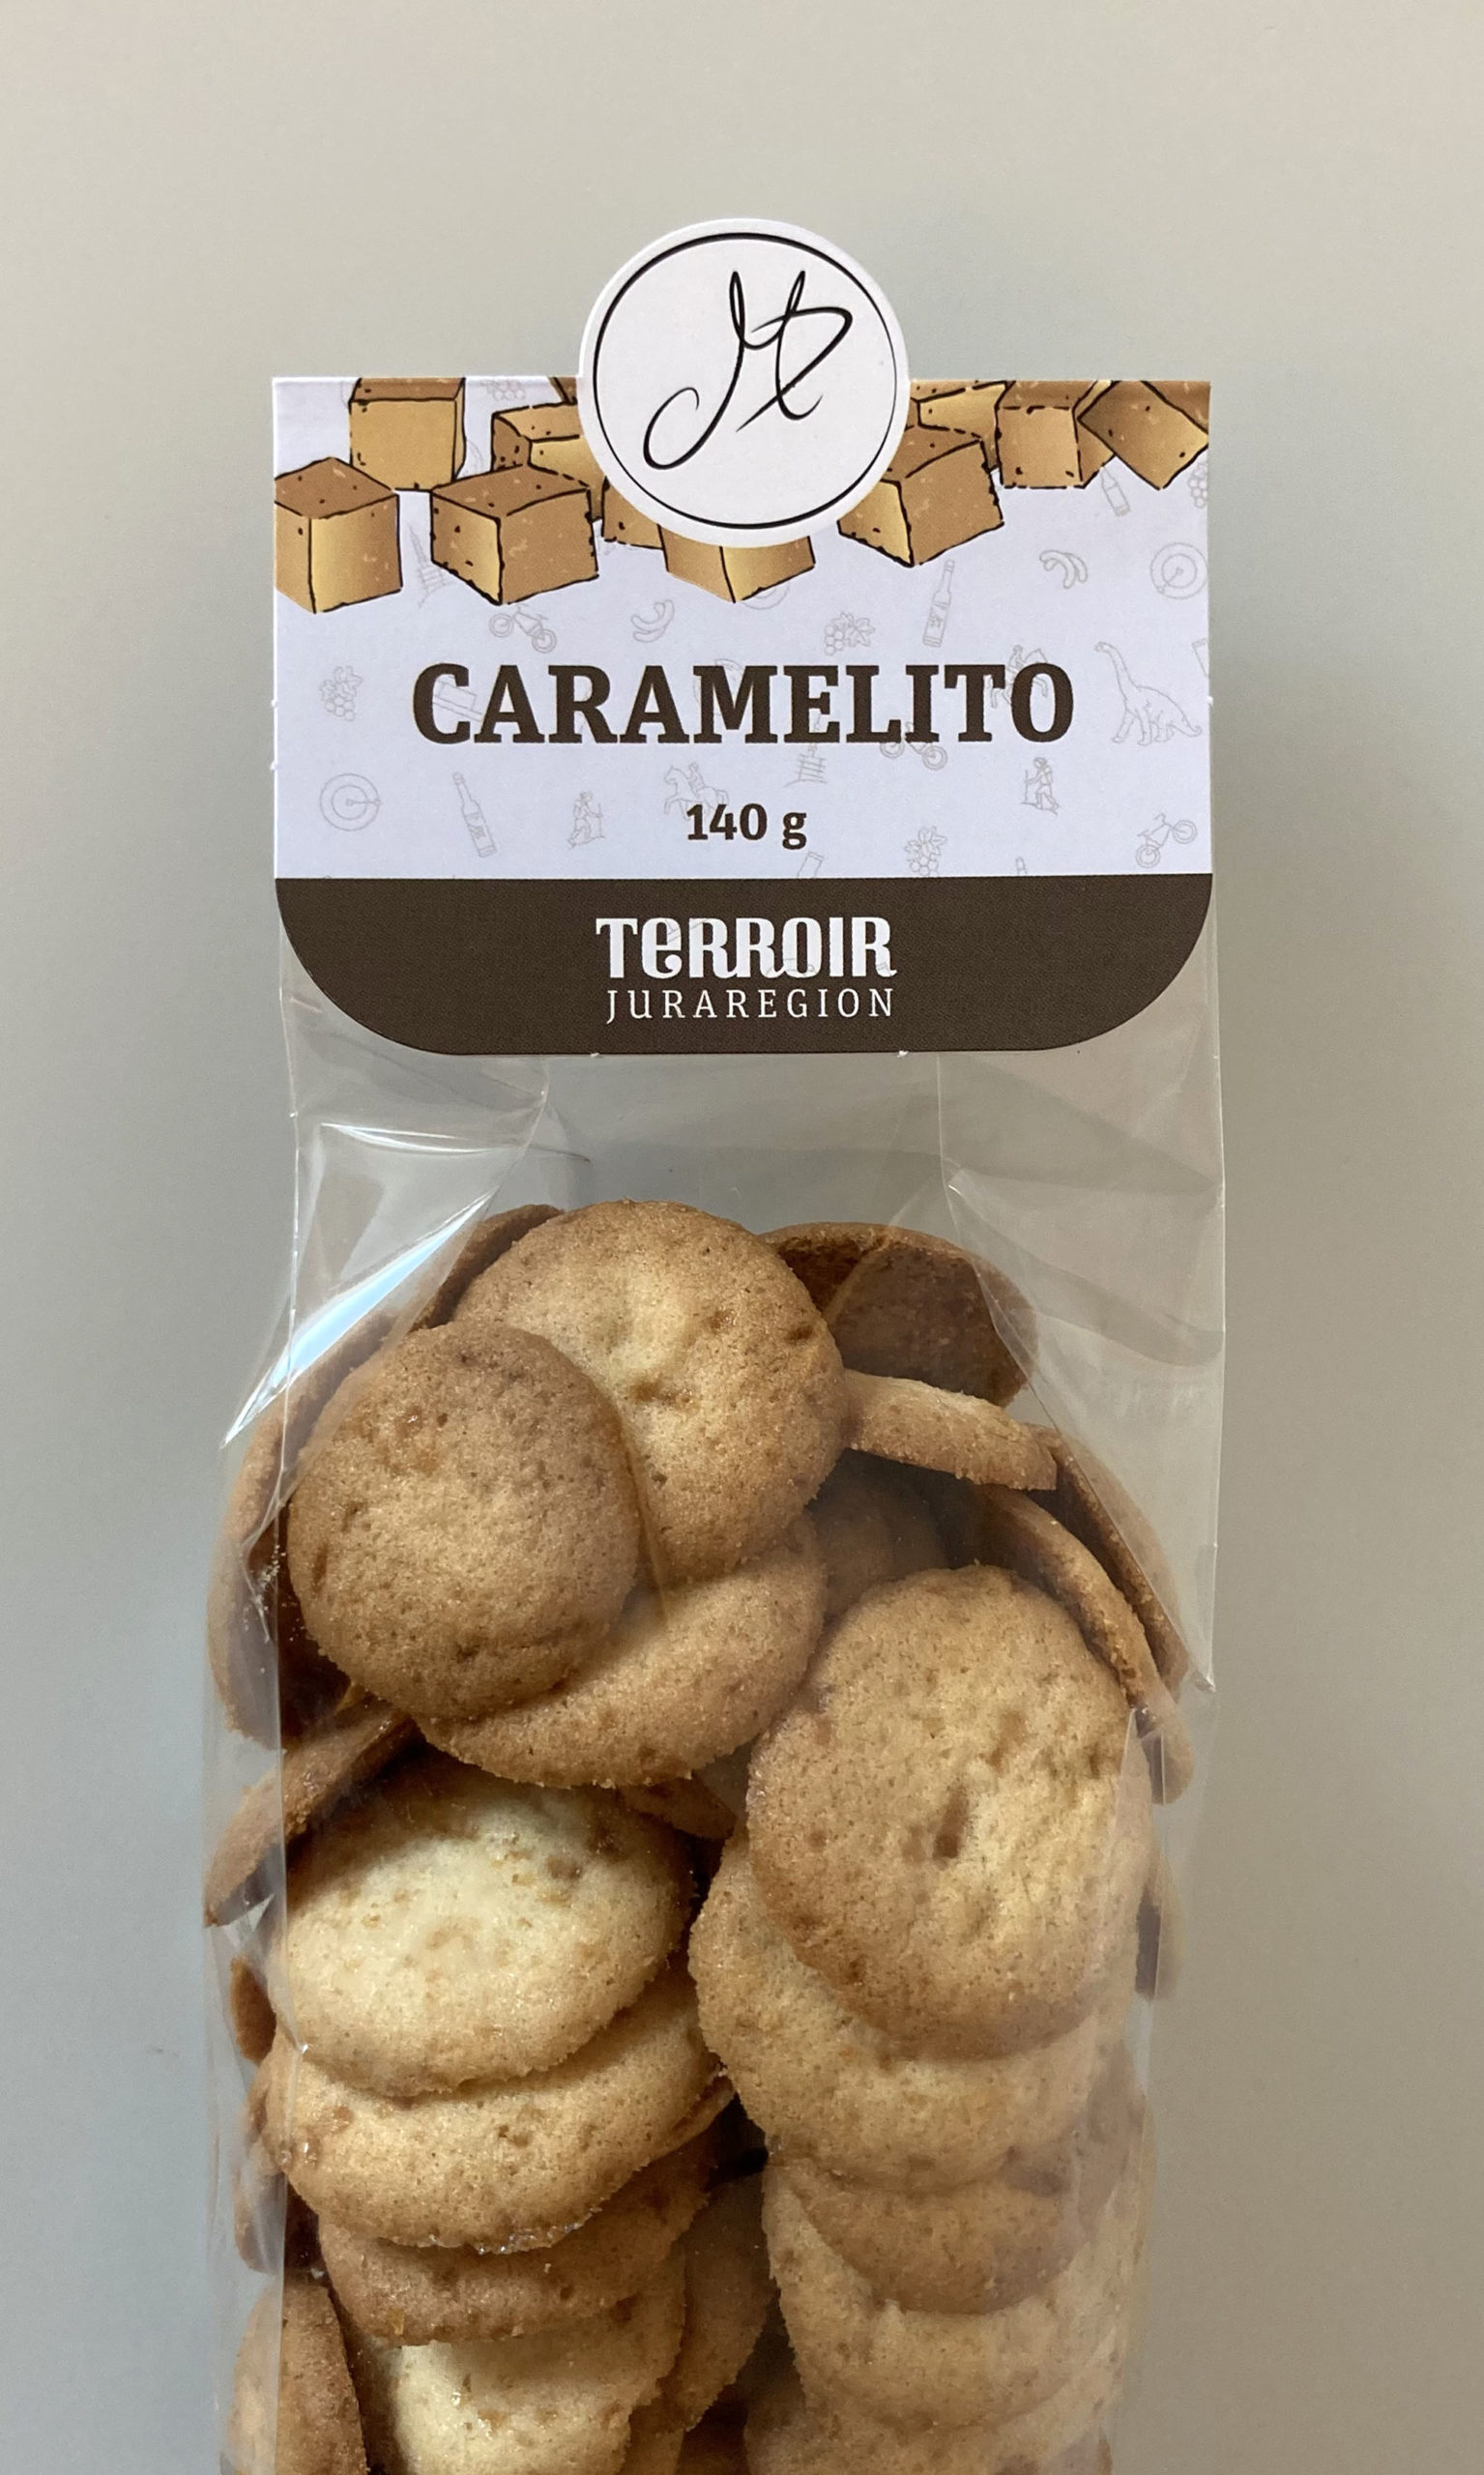 Biscuits Daetwyler Terroir Juraregion Caramelito